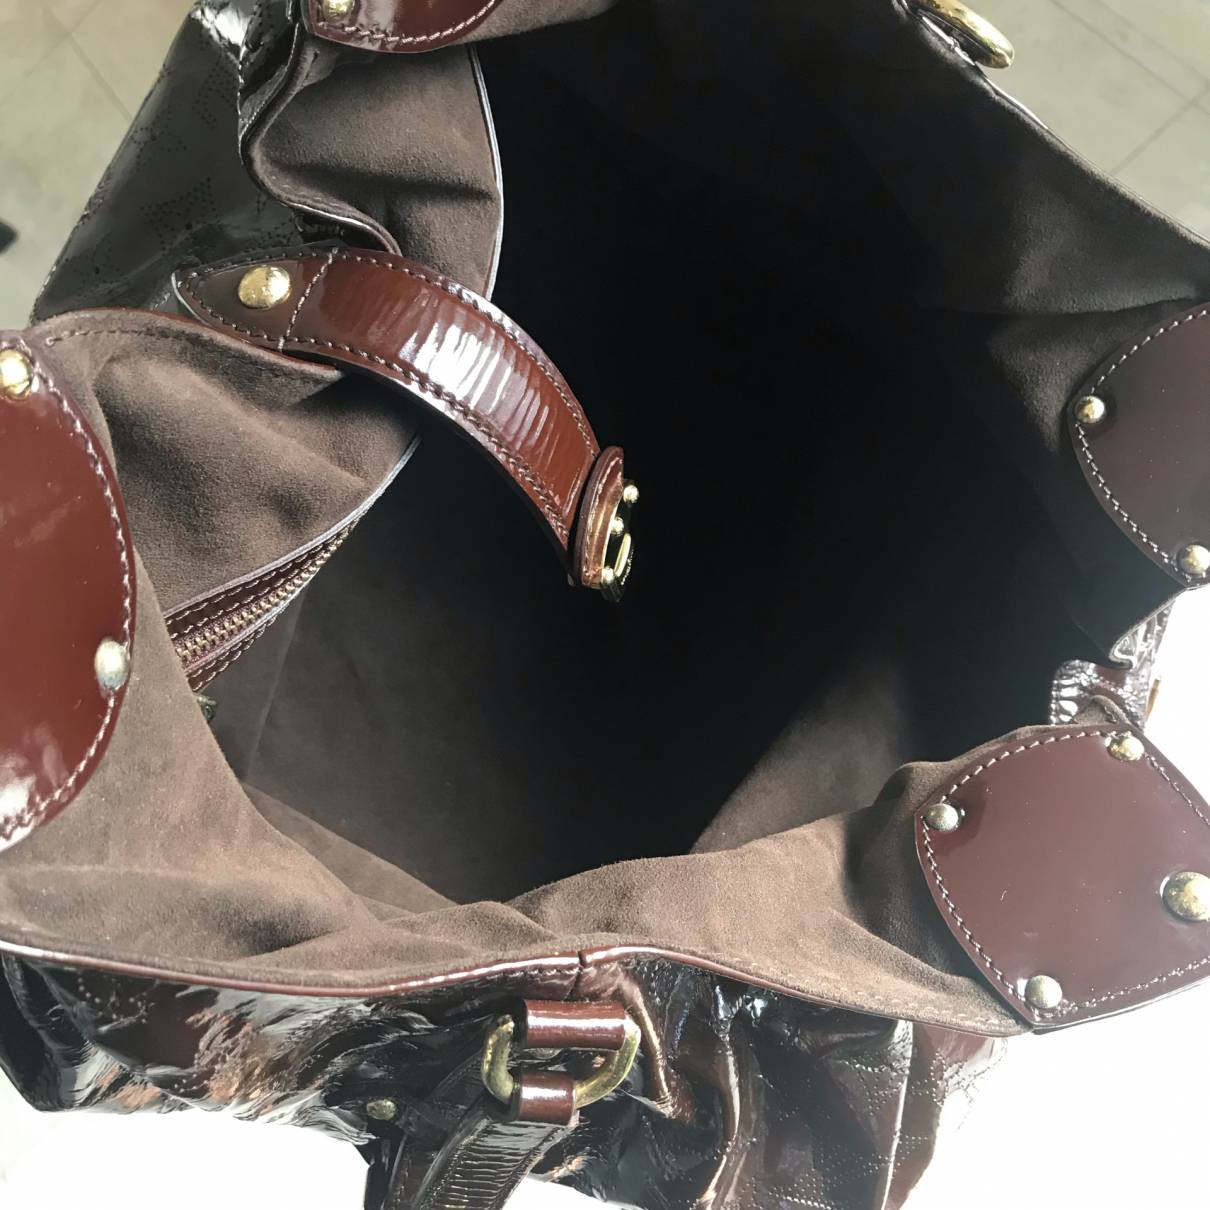 Mahina patent leather handbag Louis Vuitton Brown in Patent